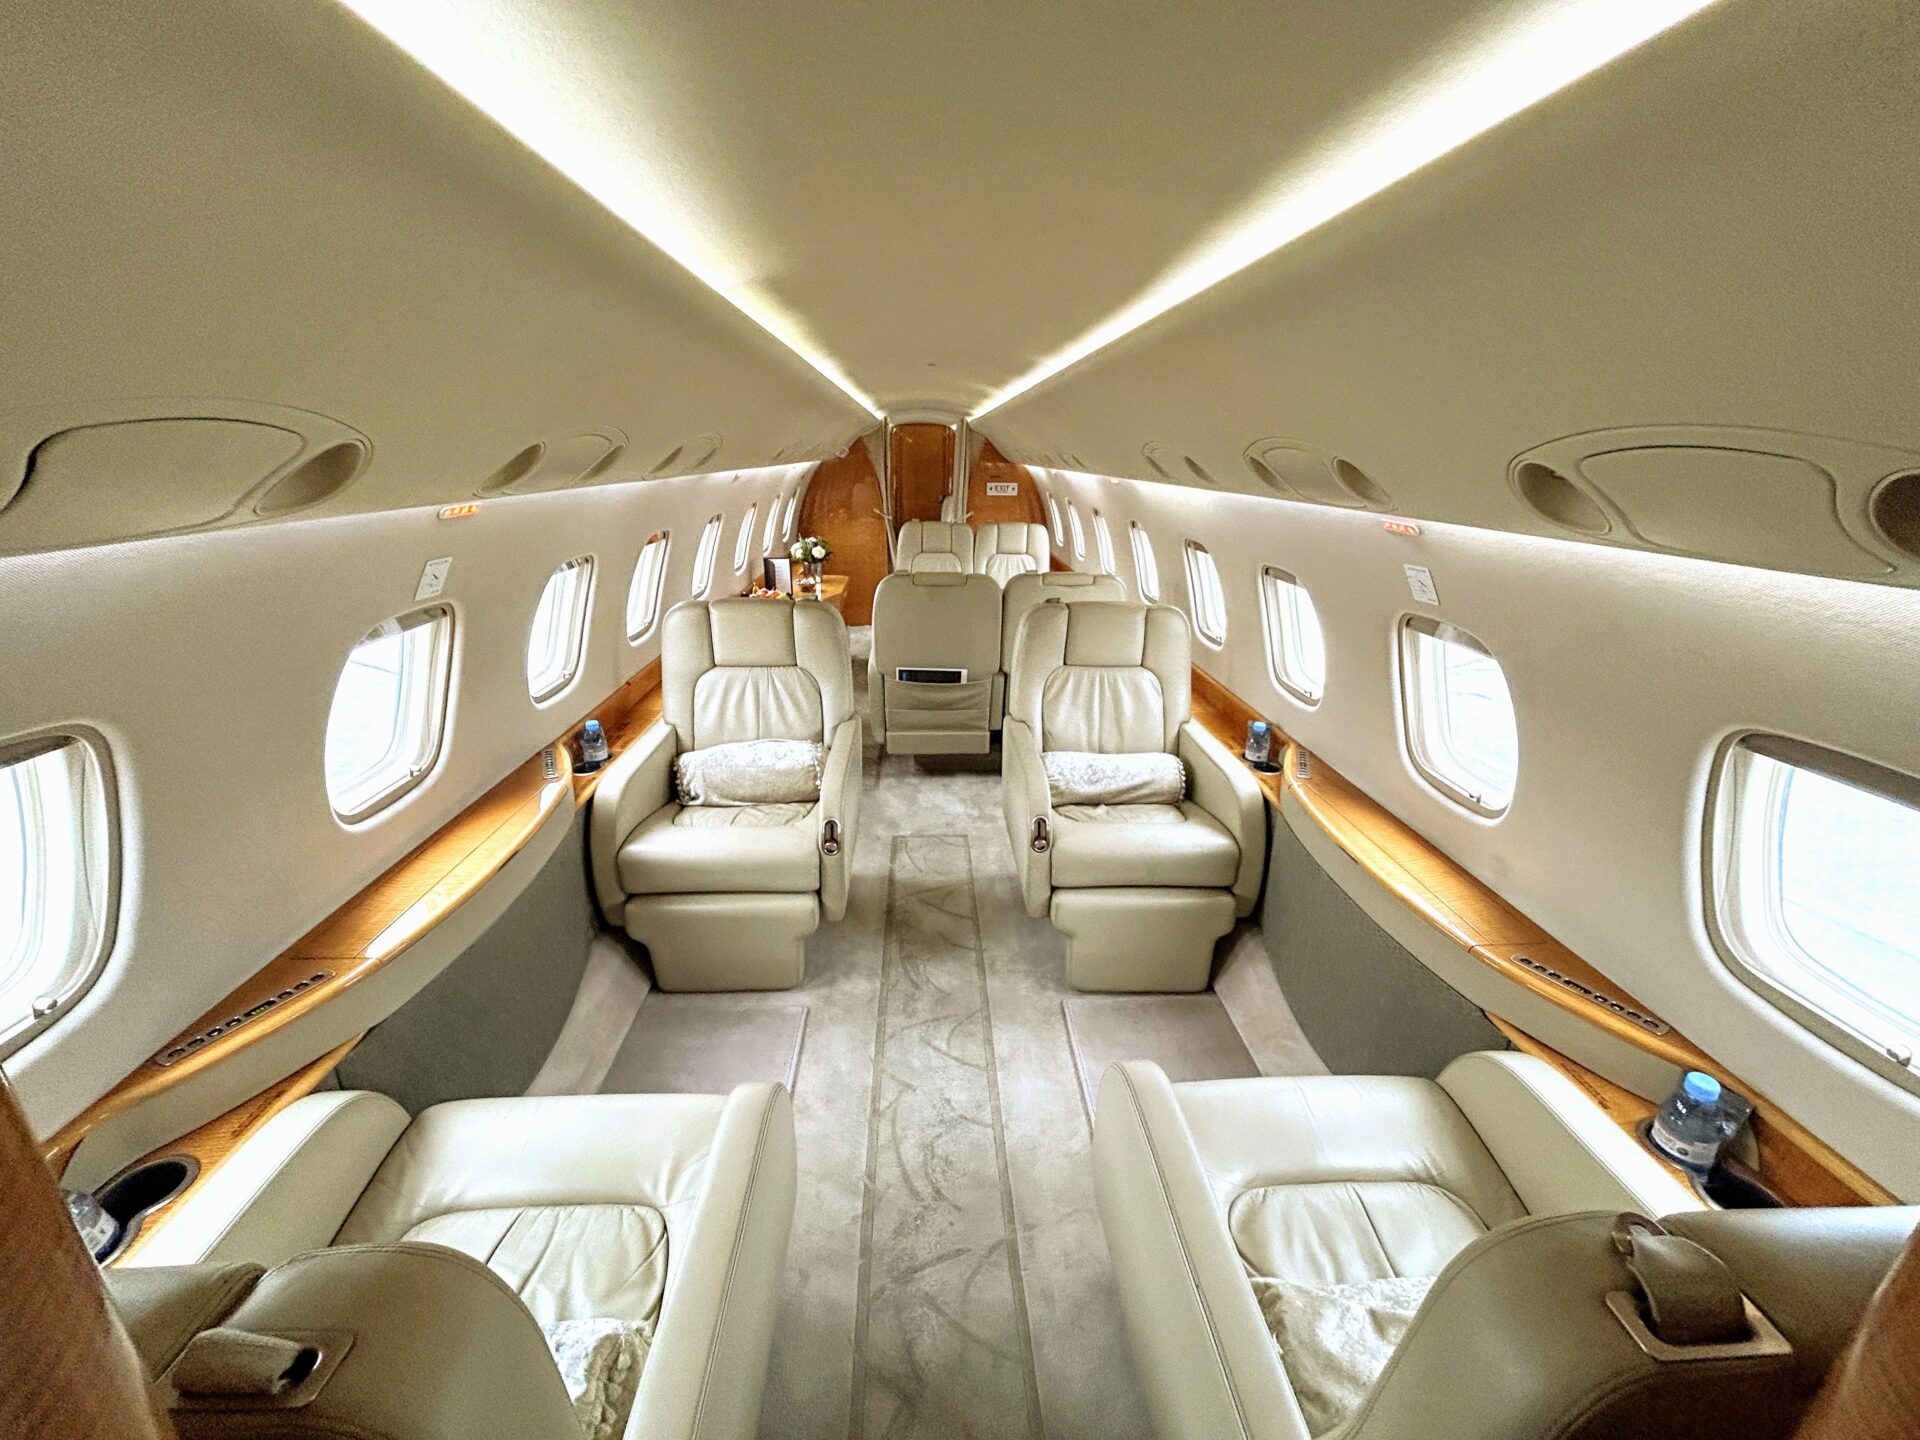 Private jet interior Stock Photos, Royalty Free Private jet interior Images  | Depositphotos